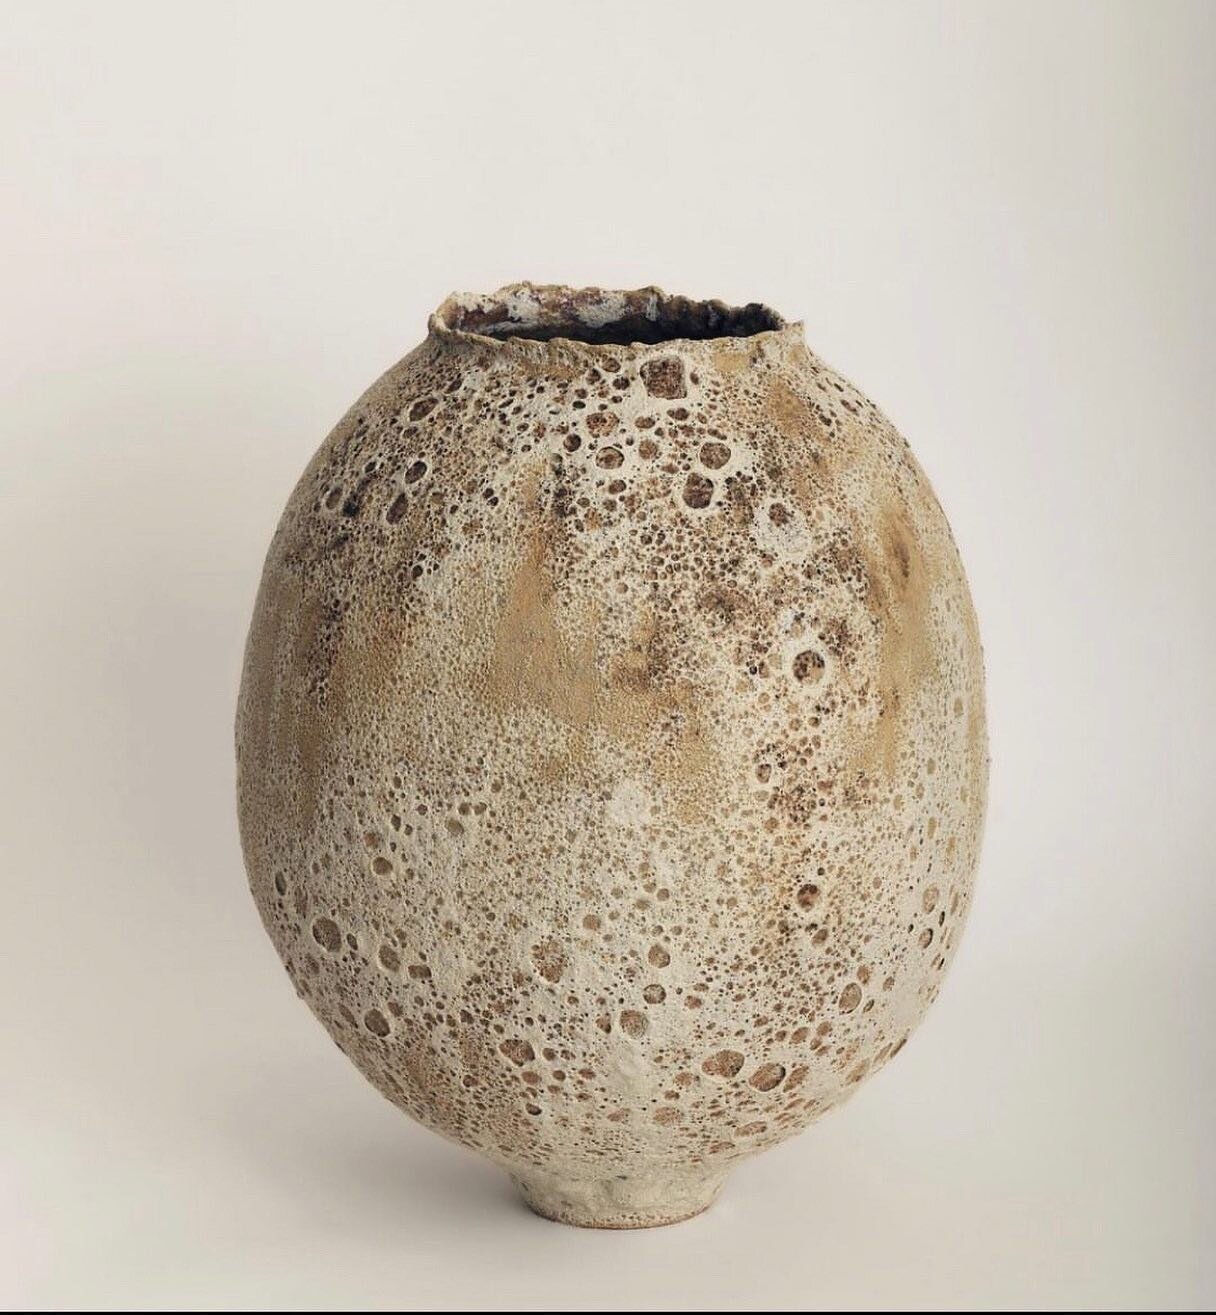 Monday inspiration by @dhaene_studio 
.
.
.
#inalcovadaily
.
.
.
#clay #pottery #naturalmaterials #ceramics #artesanal #Mediterranean #mallorca #majorca #naturaltouches #quietluxury #interiorismo #ceramica #inalcova #warmtones #minimalism #sofminimal